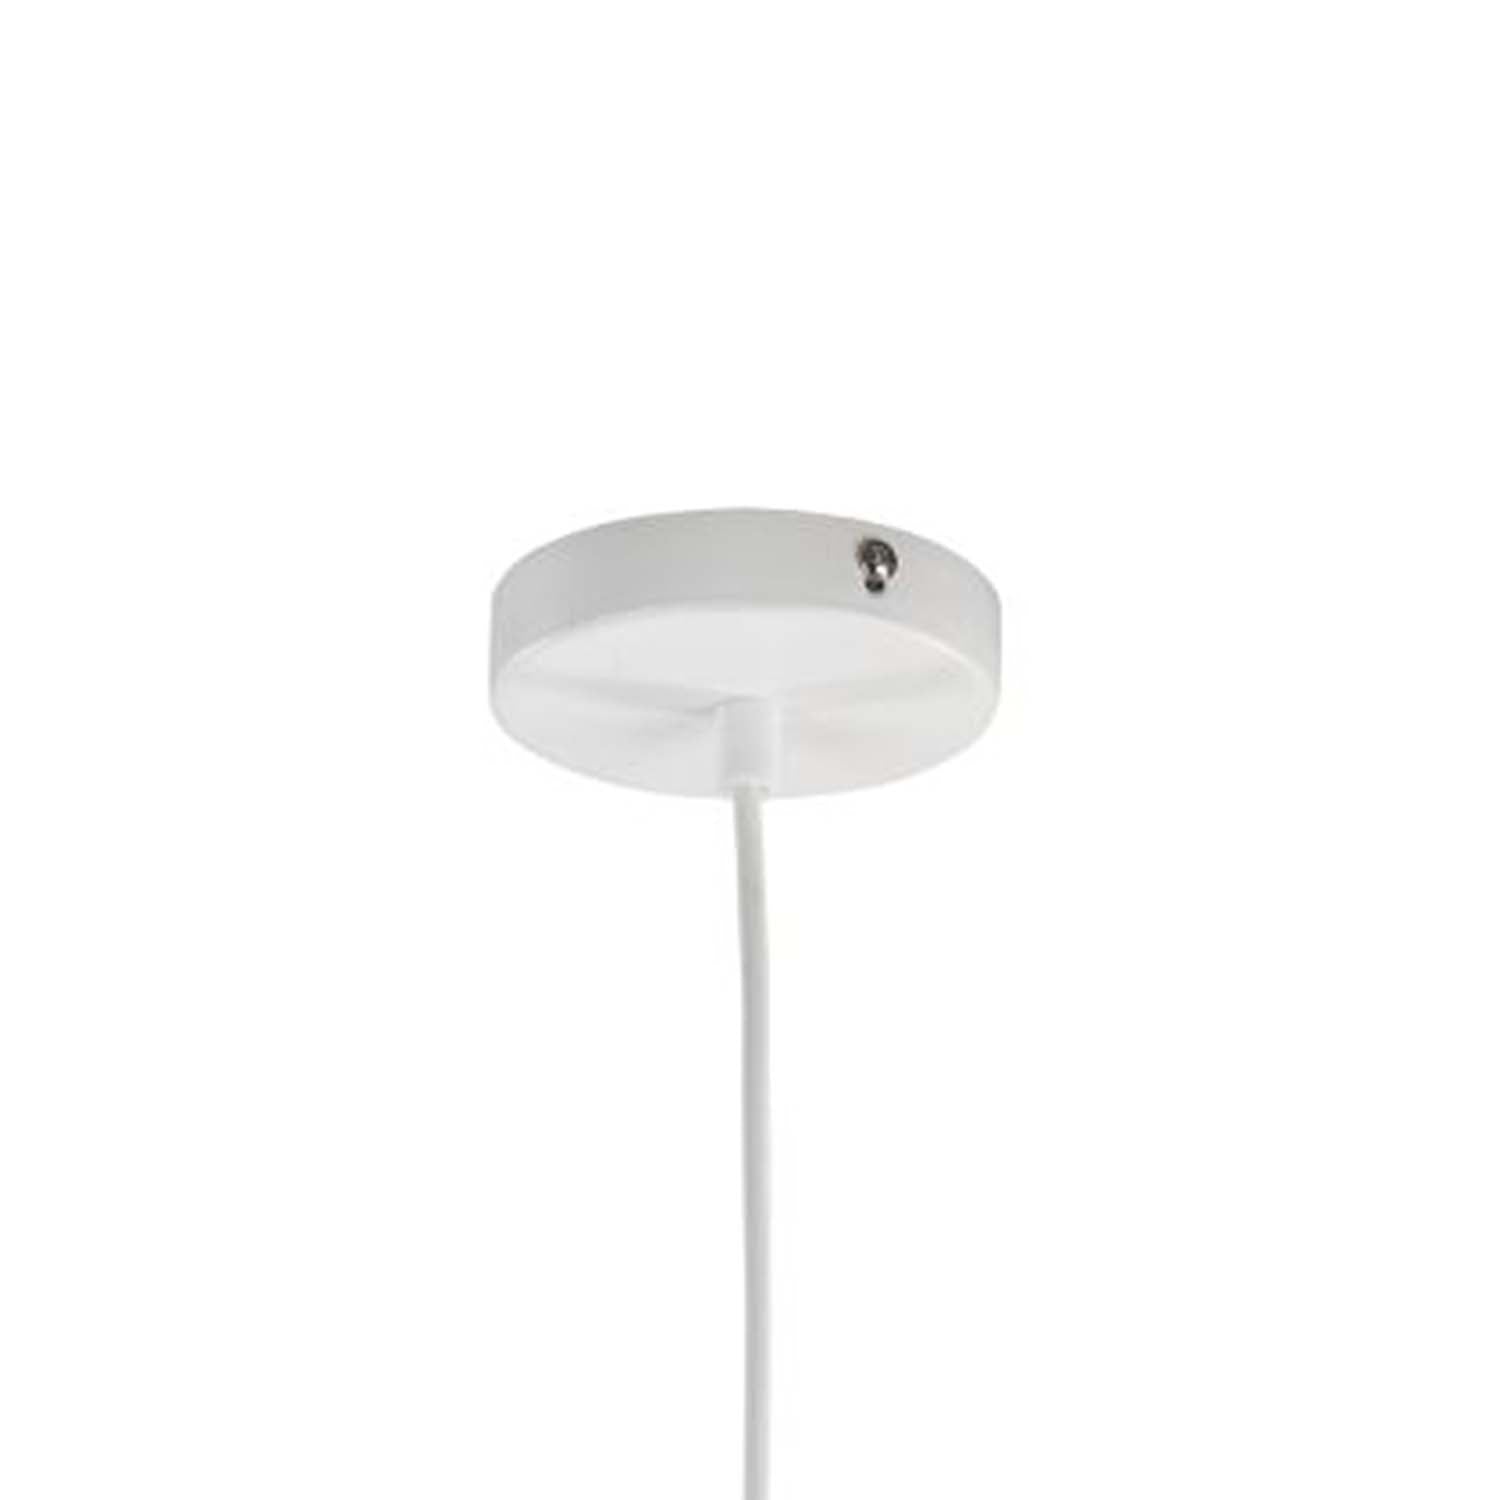 BICONES - Scandinavian wooden and aluminum pendant lamp for kitchen or island